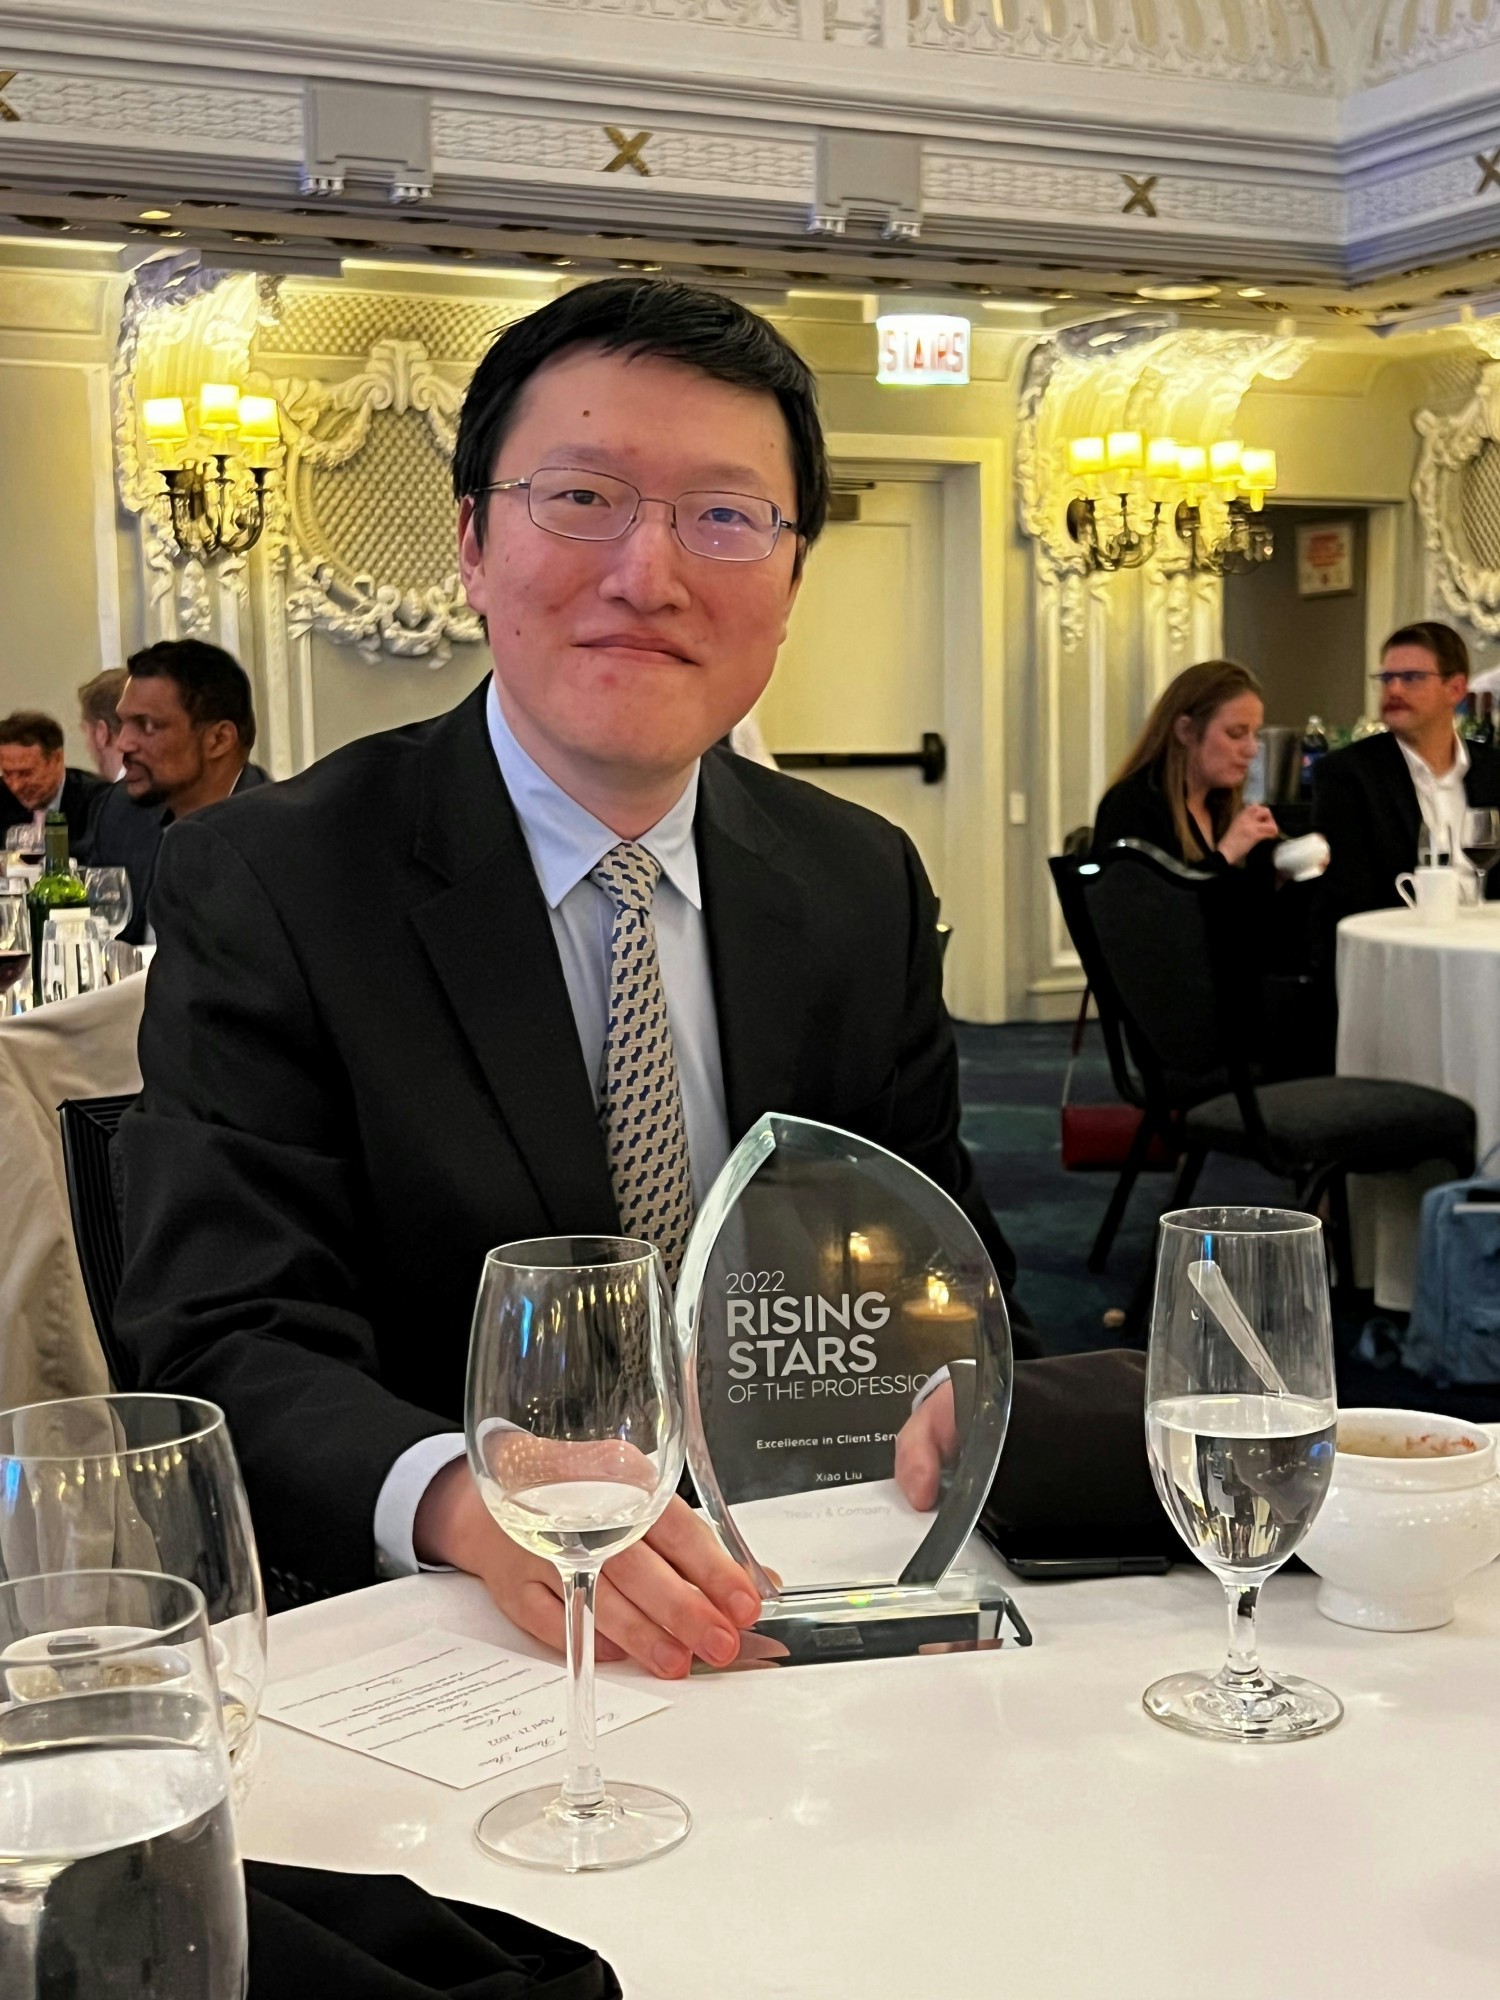 Xiao winning Consulting Magazine's Rising Star Award.